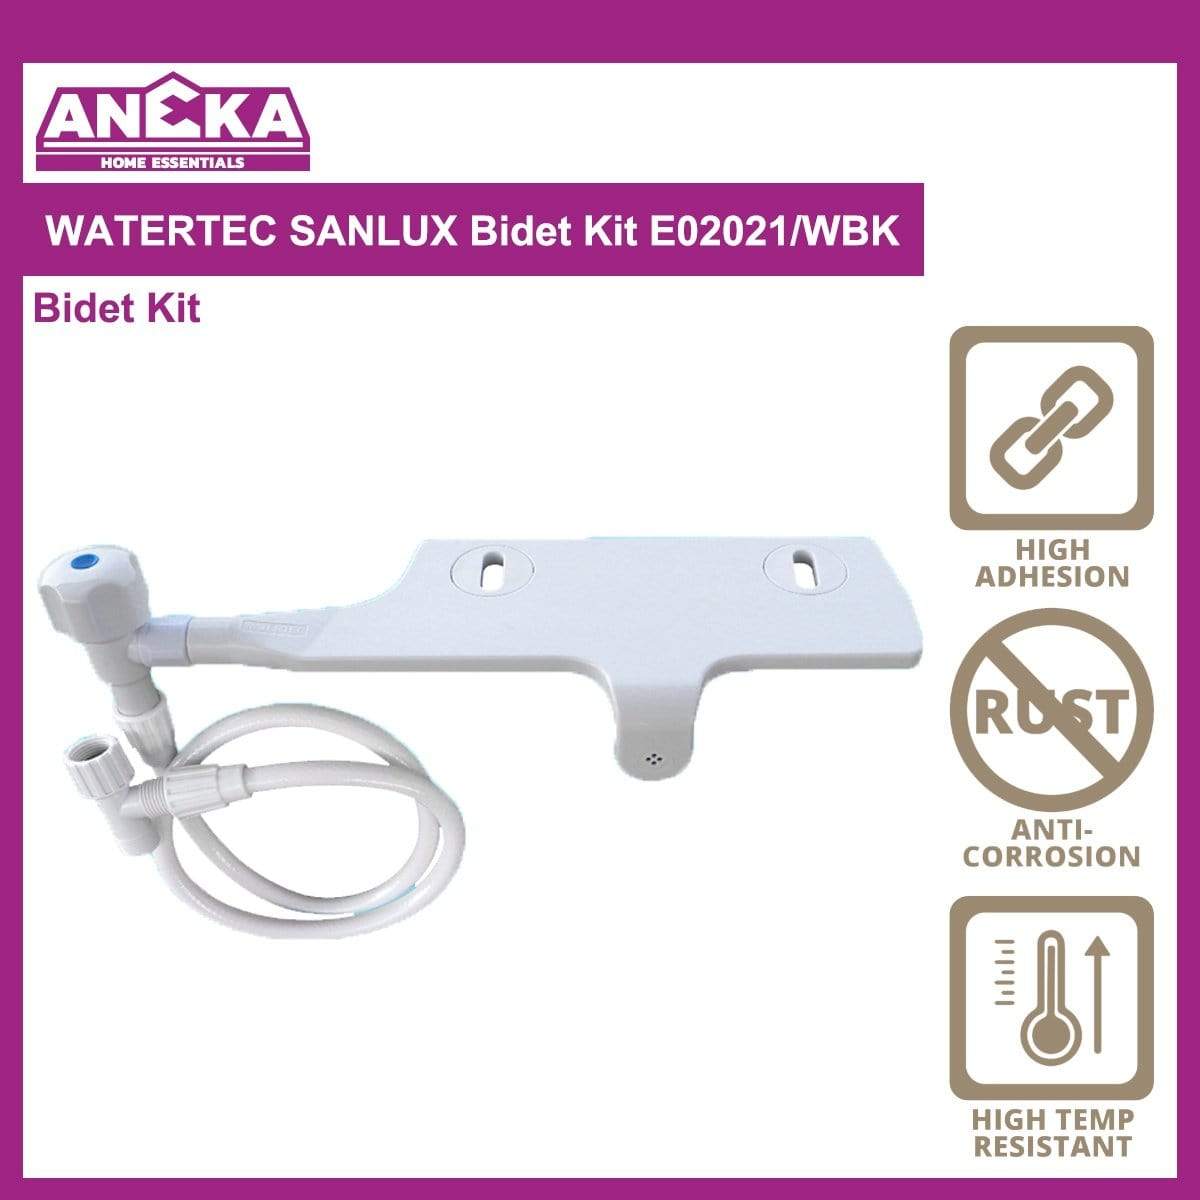 WATERTEC SANLUX Bidet Kit E02021/WBK